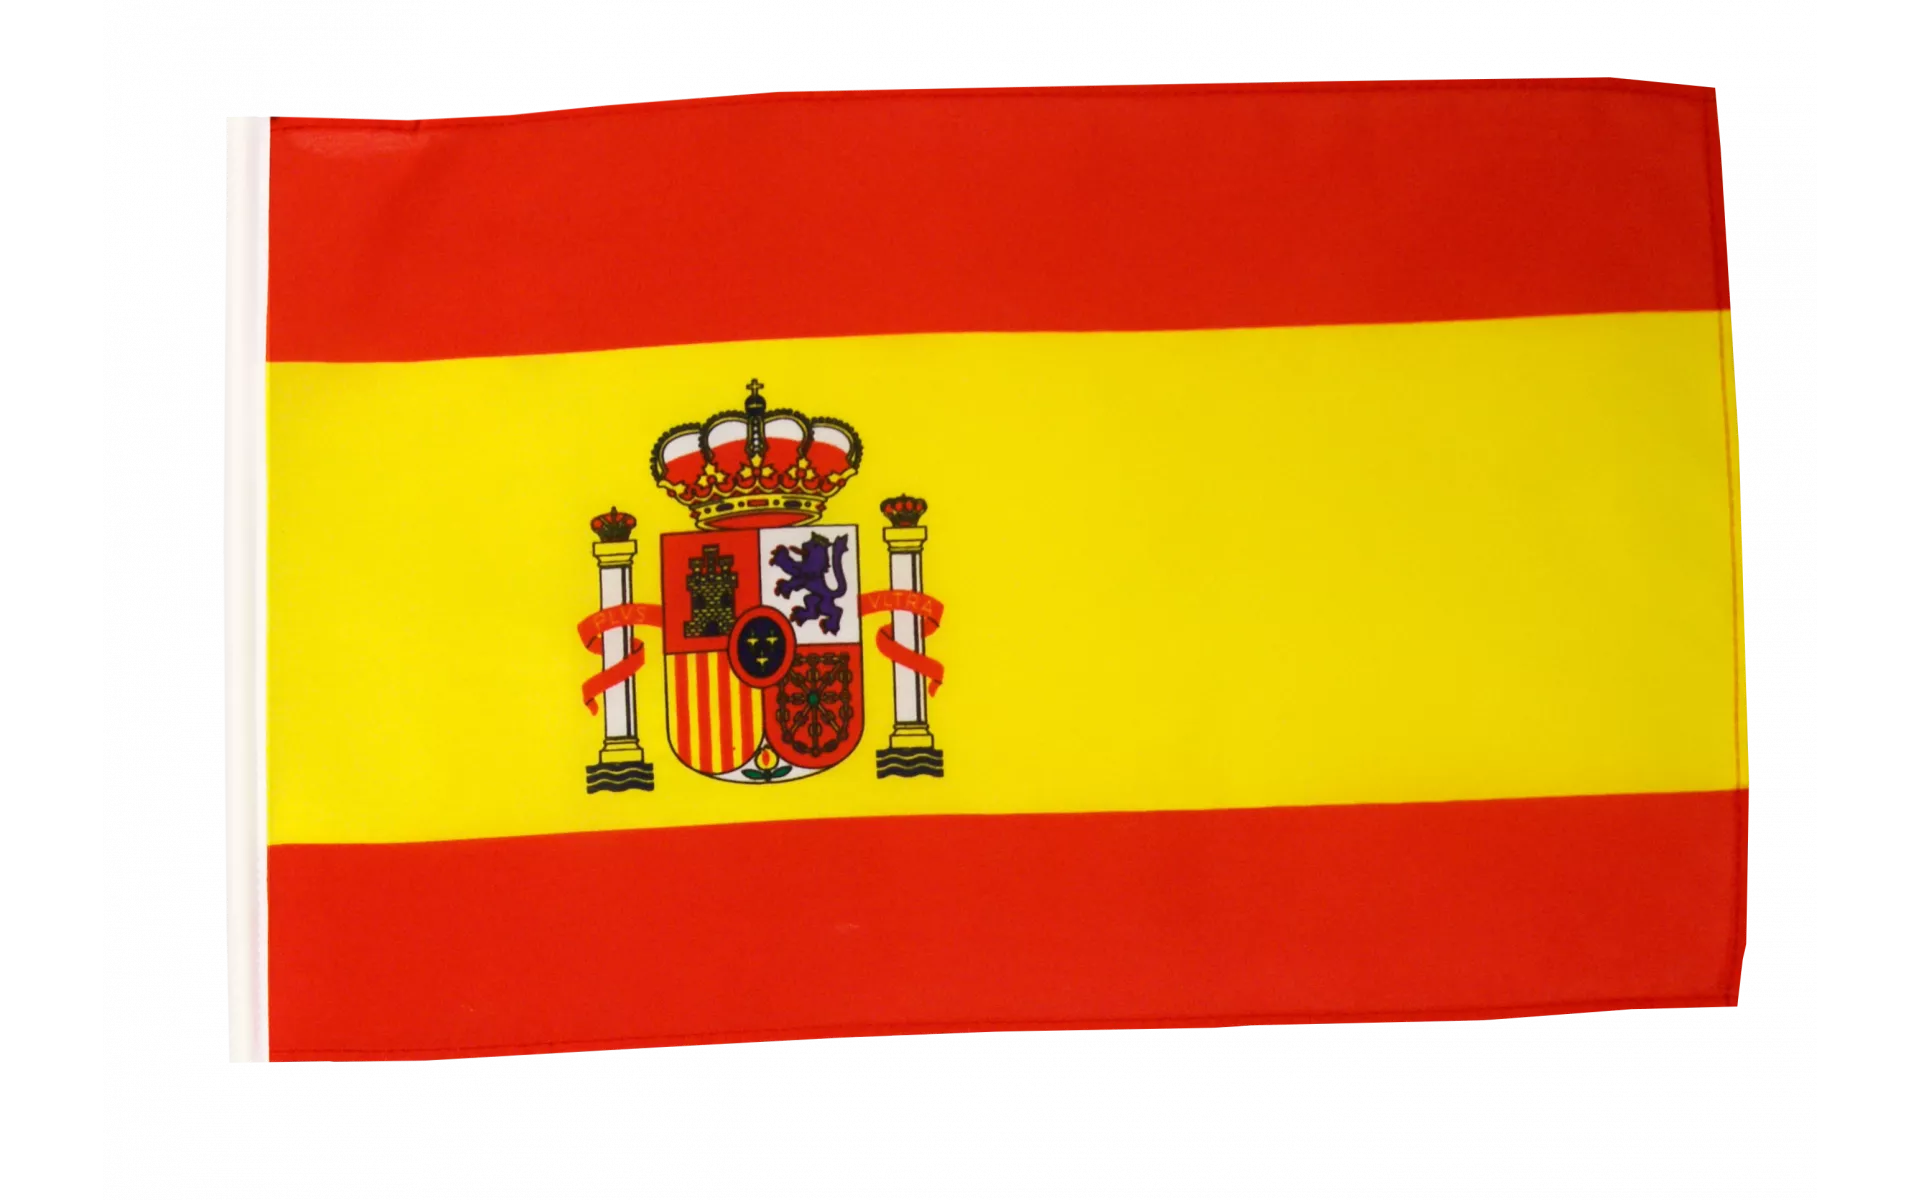 45 cm x 30 cm rot gelb EM Fanartikel 4 x Autofahne Spanien Auto-Fenster Fahne Spain 